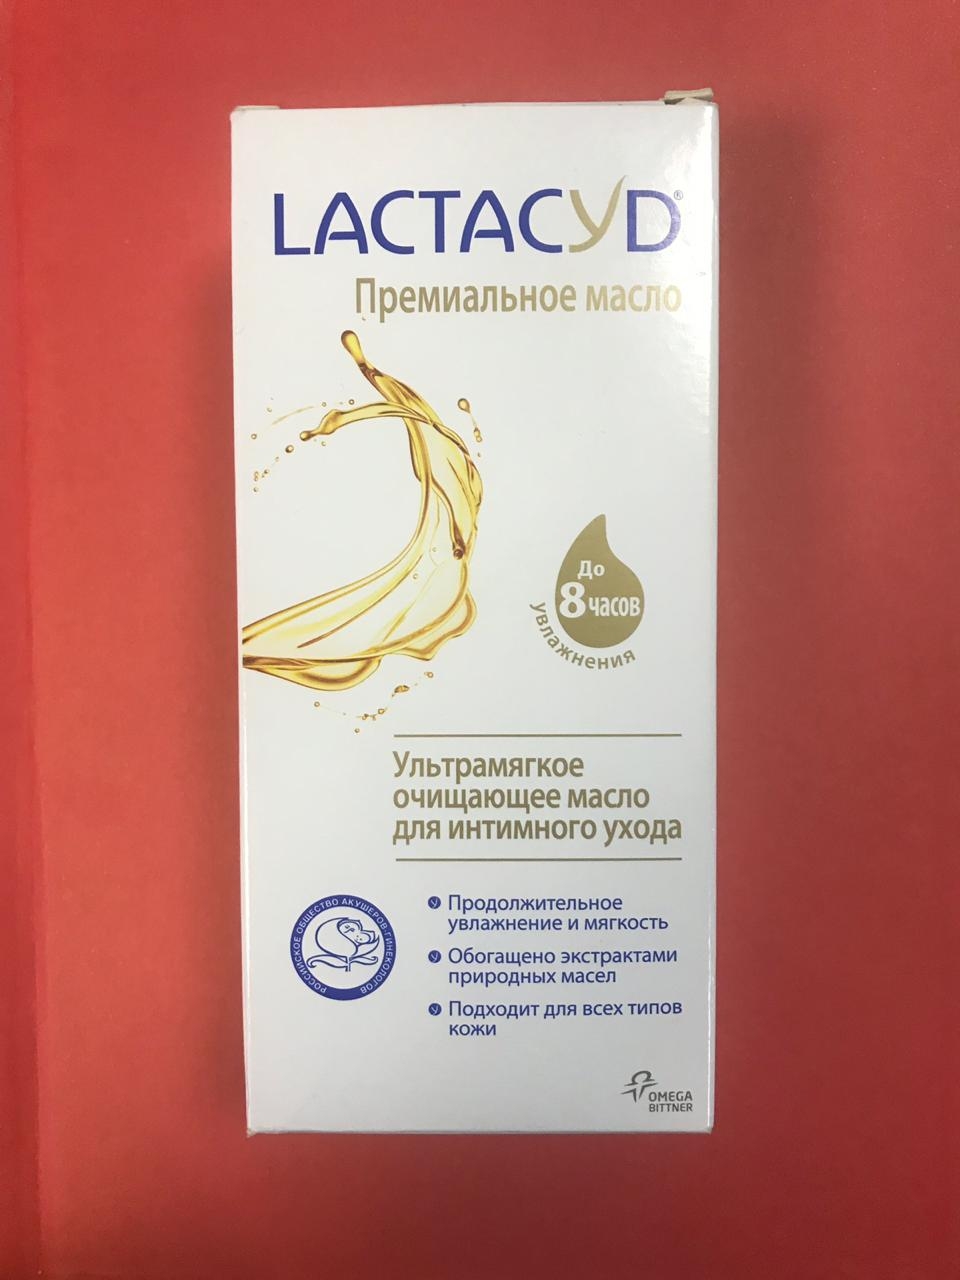 Lactacyd Лактацид Премиальное Масло отзывы